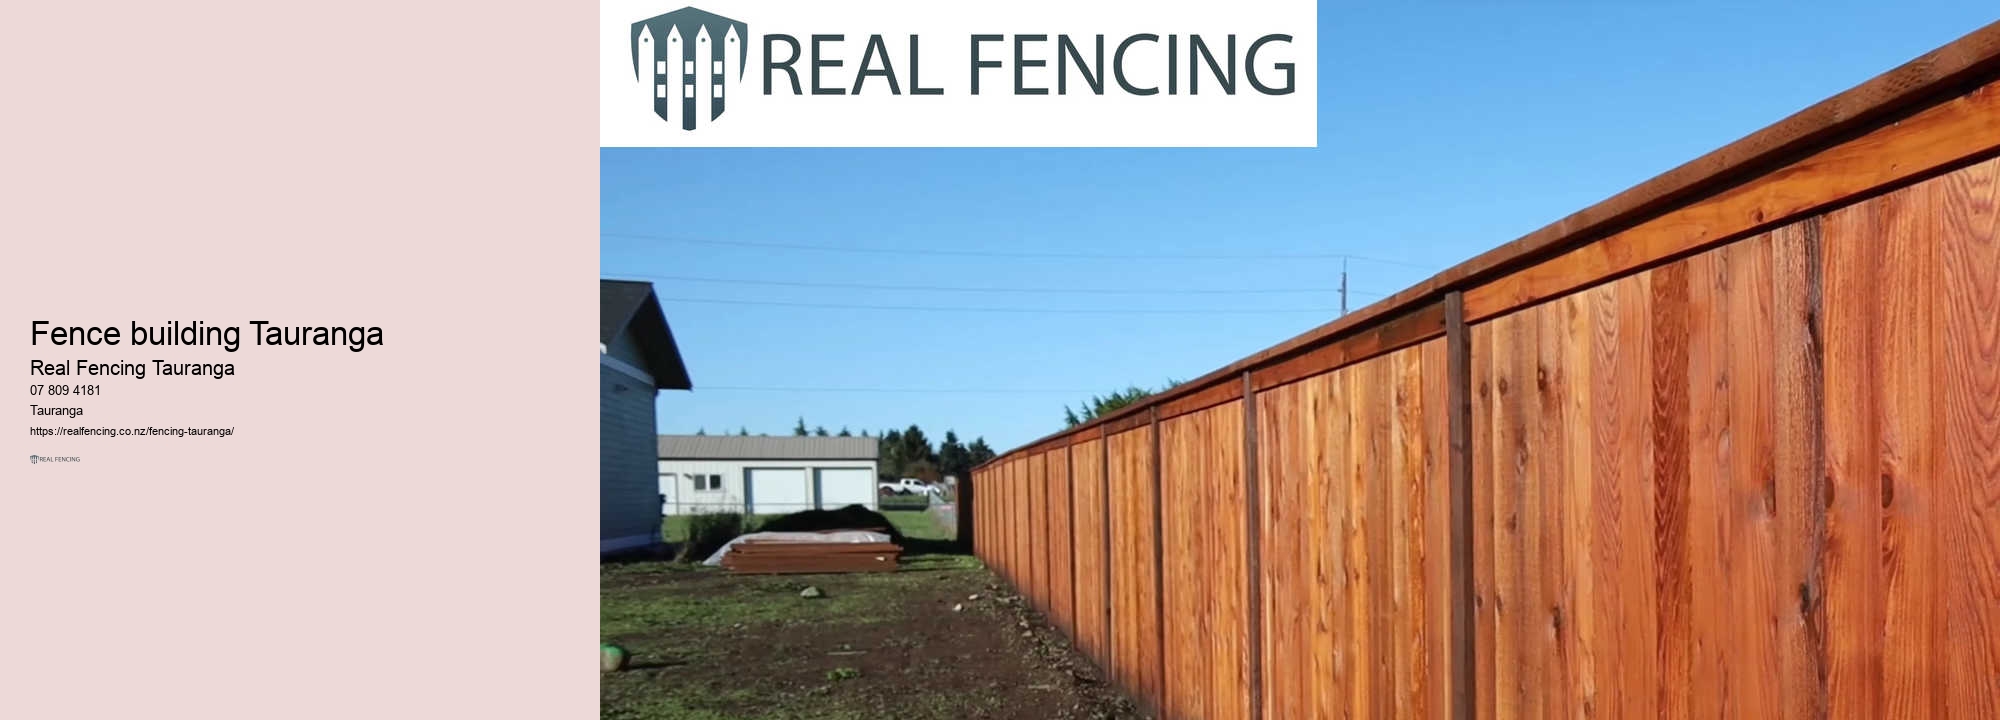 Metal fencing contractors near me